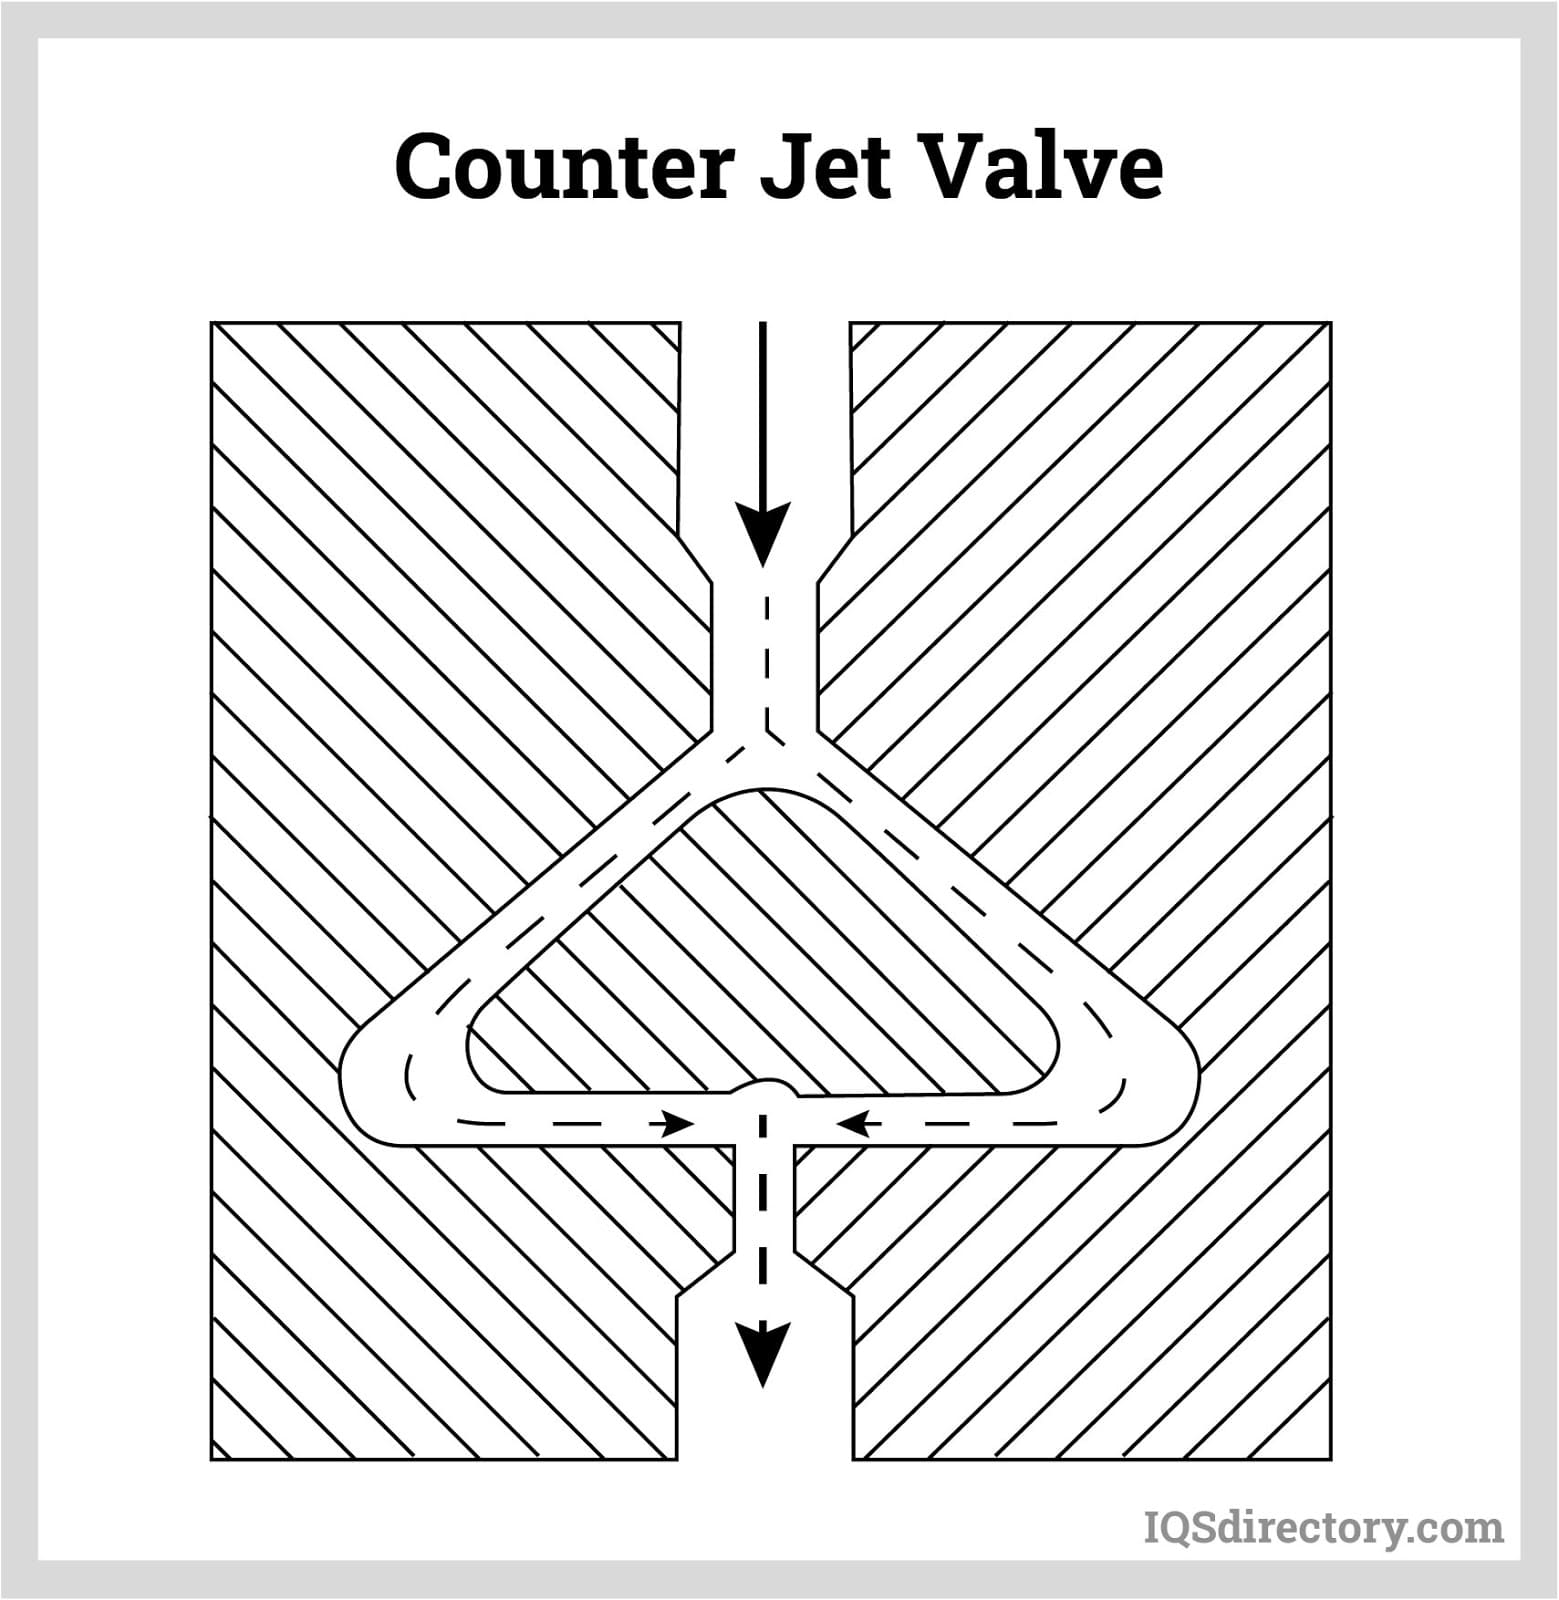 Counter Jet Valve